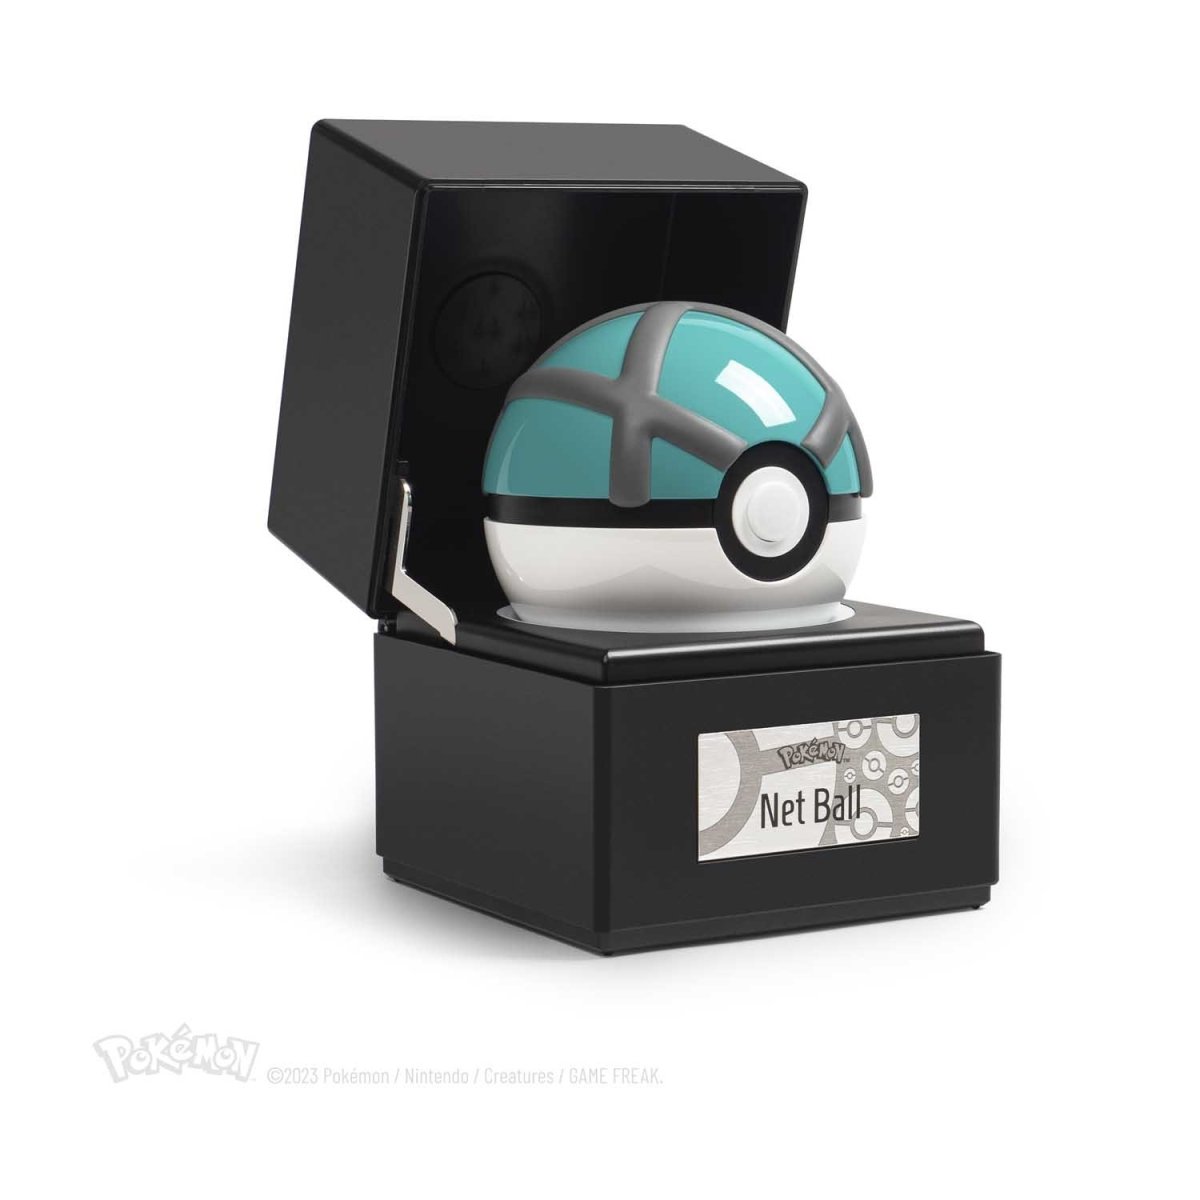 Pokémon: The Wand Company presenta la Net Ball ¡Conoce los detalles! 2